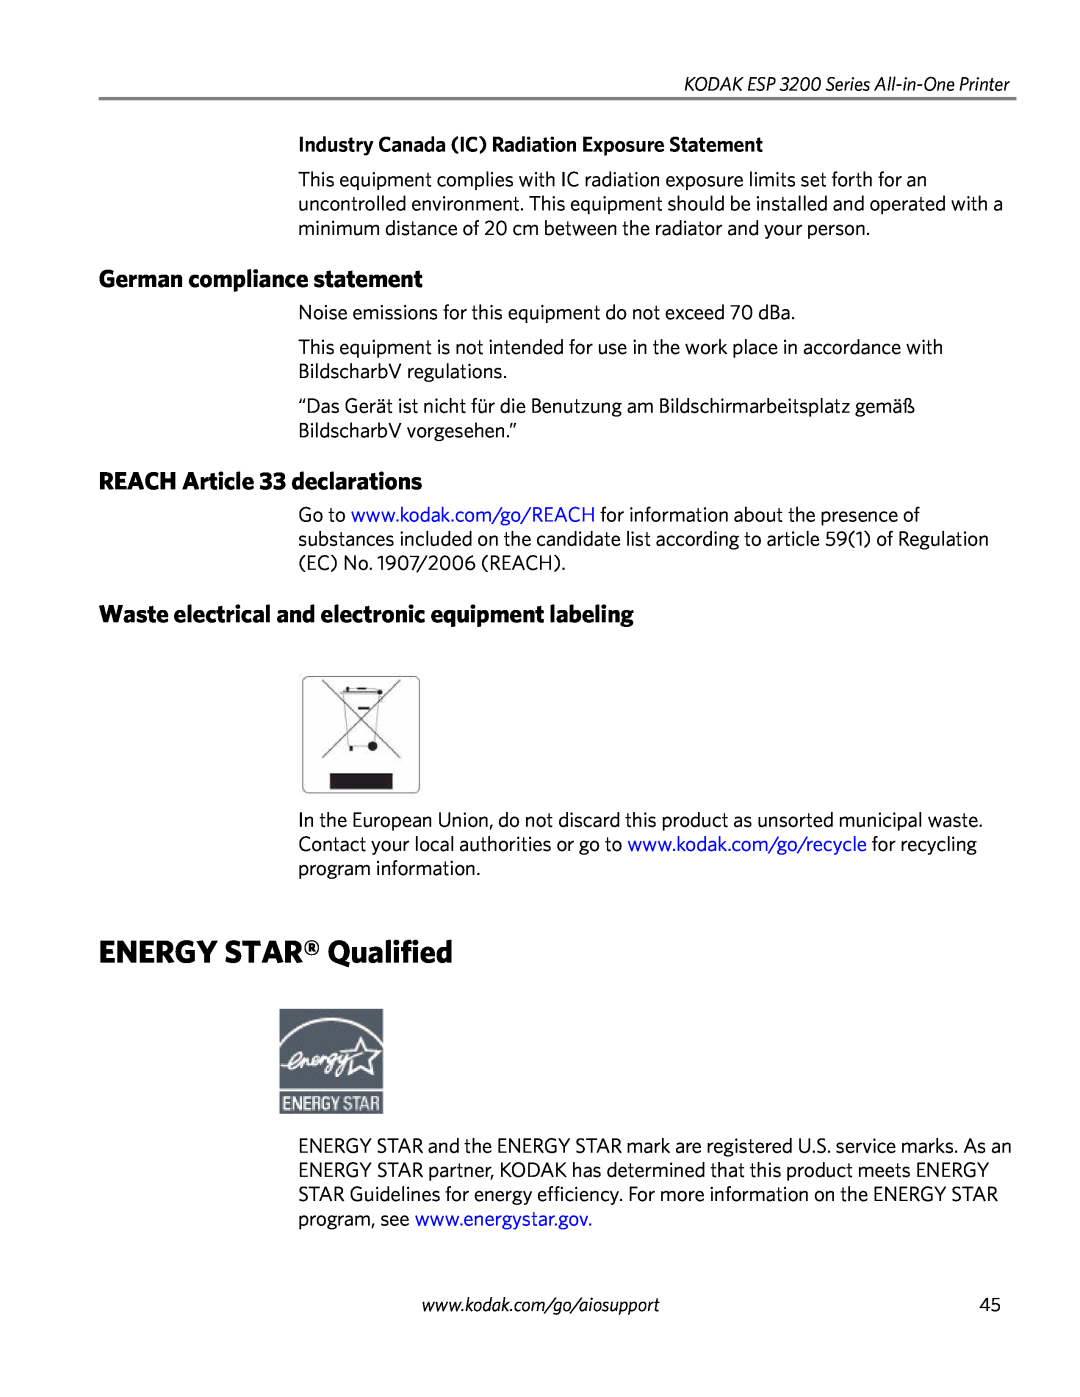 Kodak ESP 3260, ESP 3200 Series, ESP 3250 ENERGY STAR Qualified, German compliance statement, REACH Article 33 declarations 